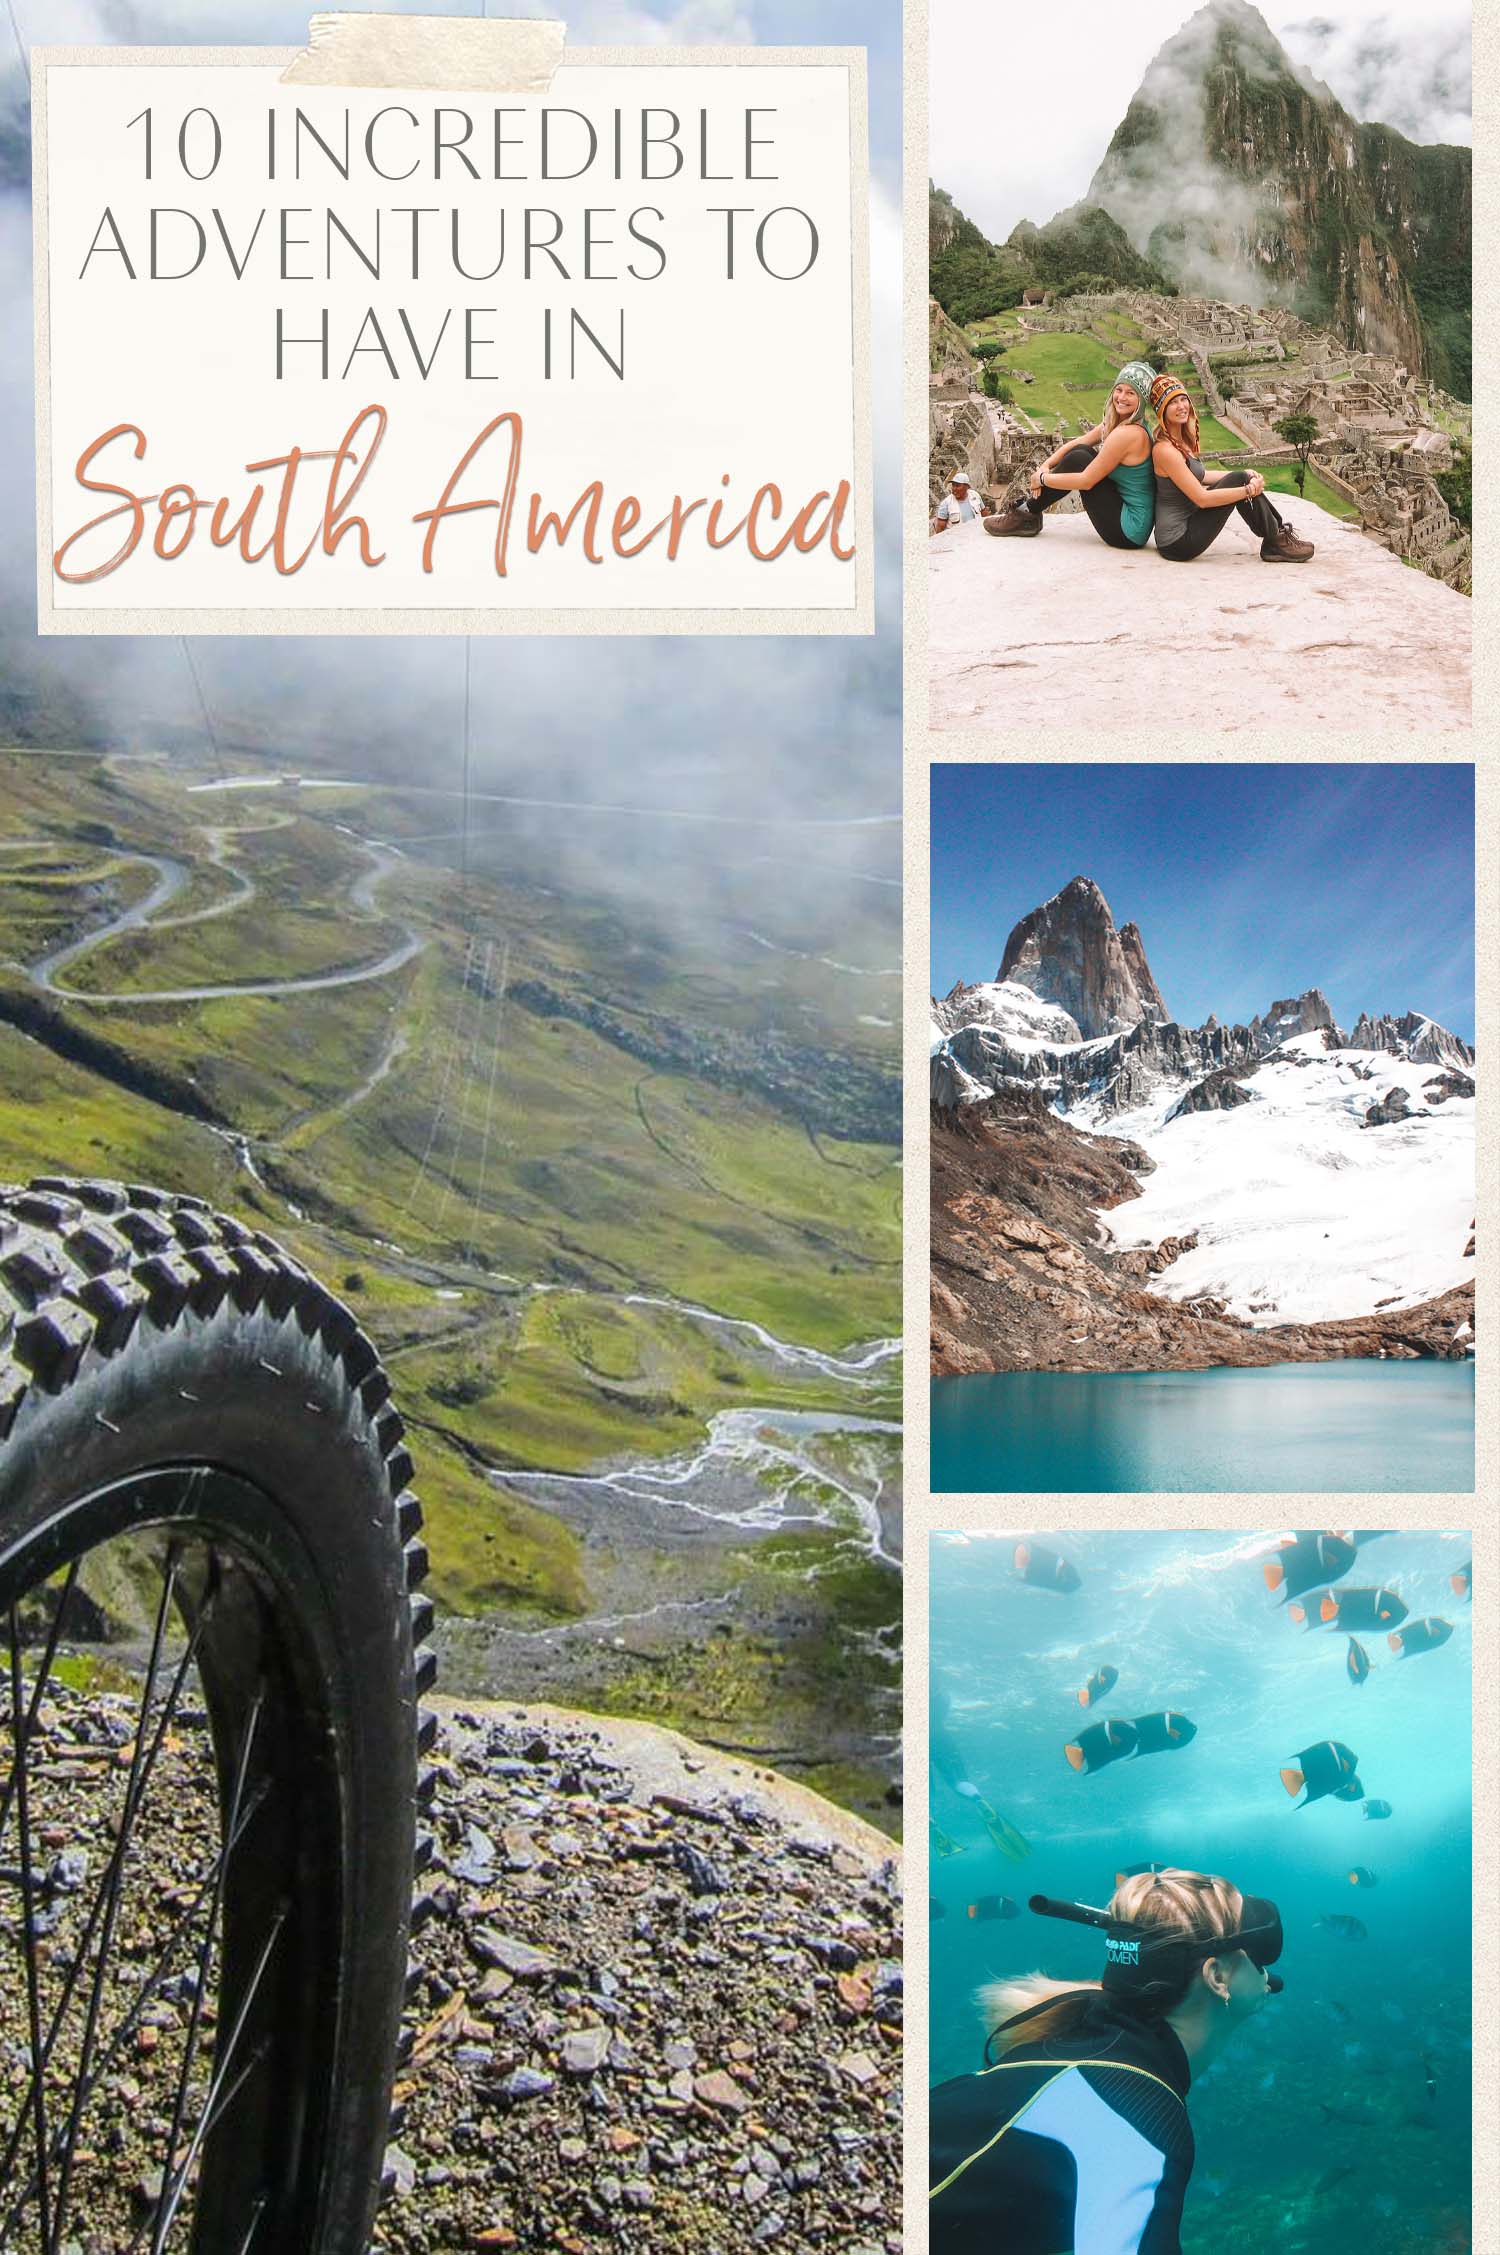 10 incredible adventures south america